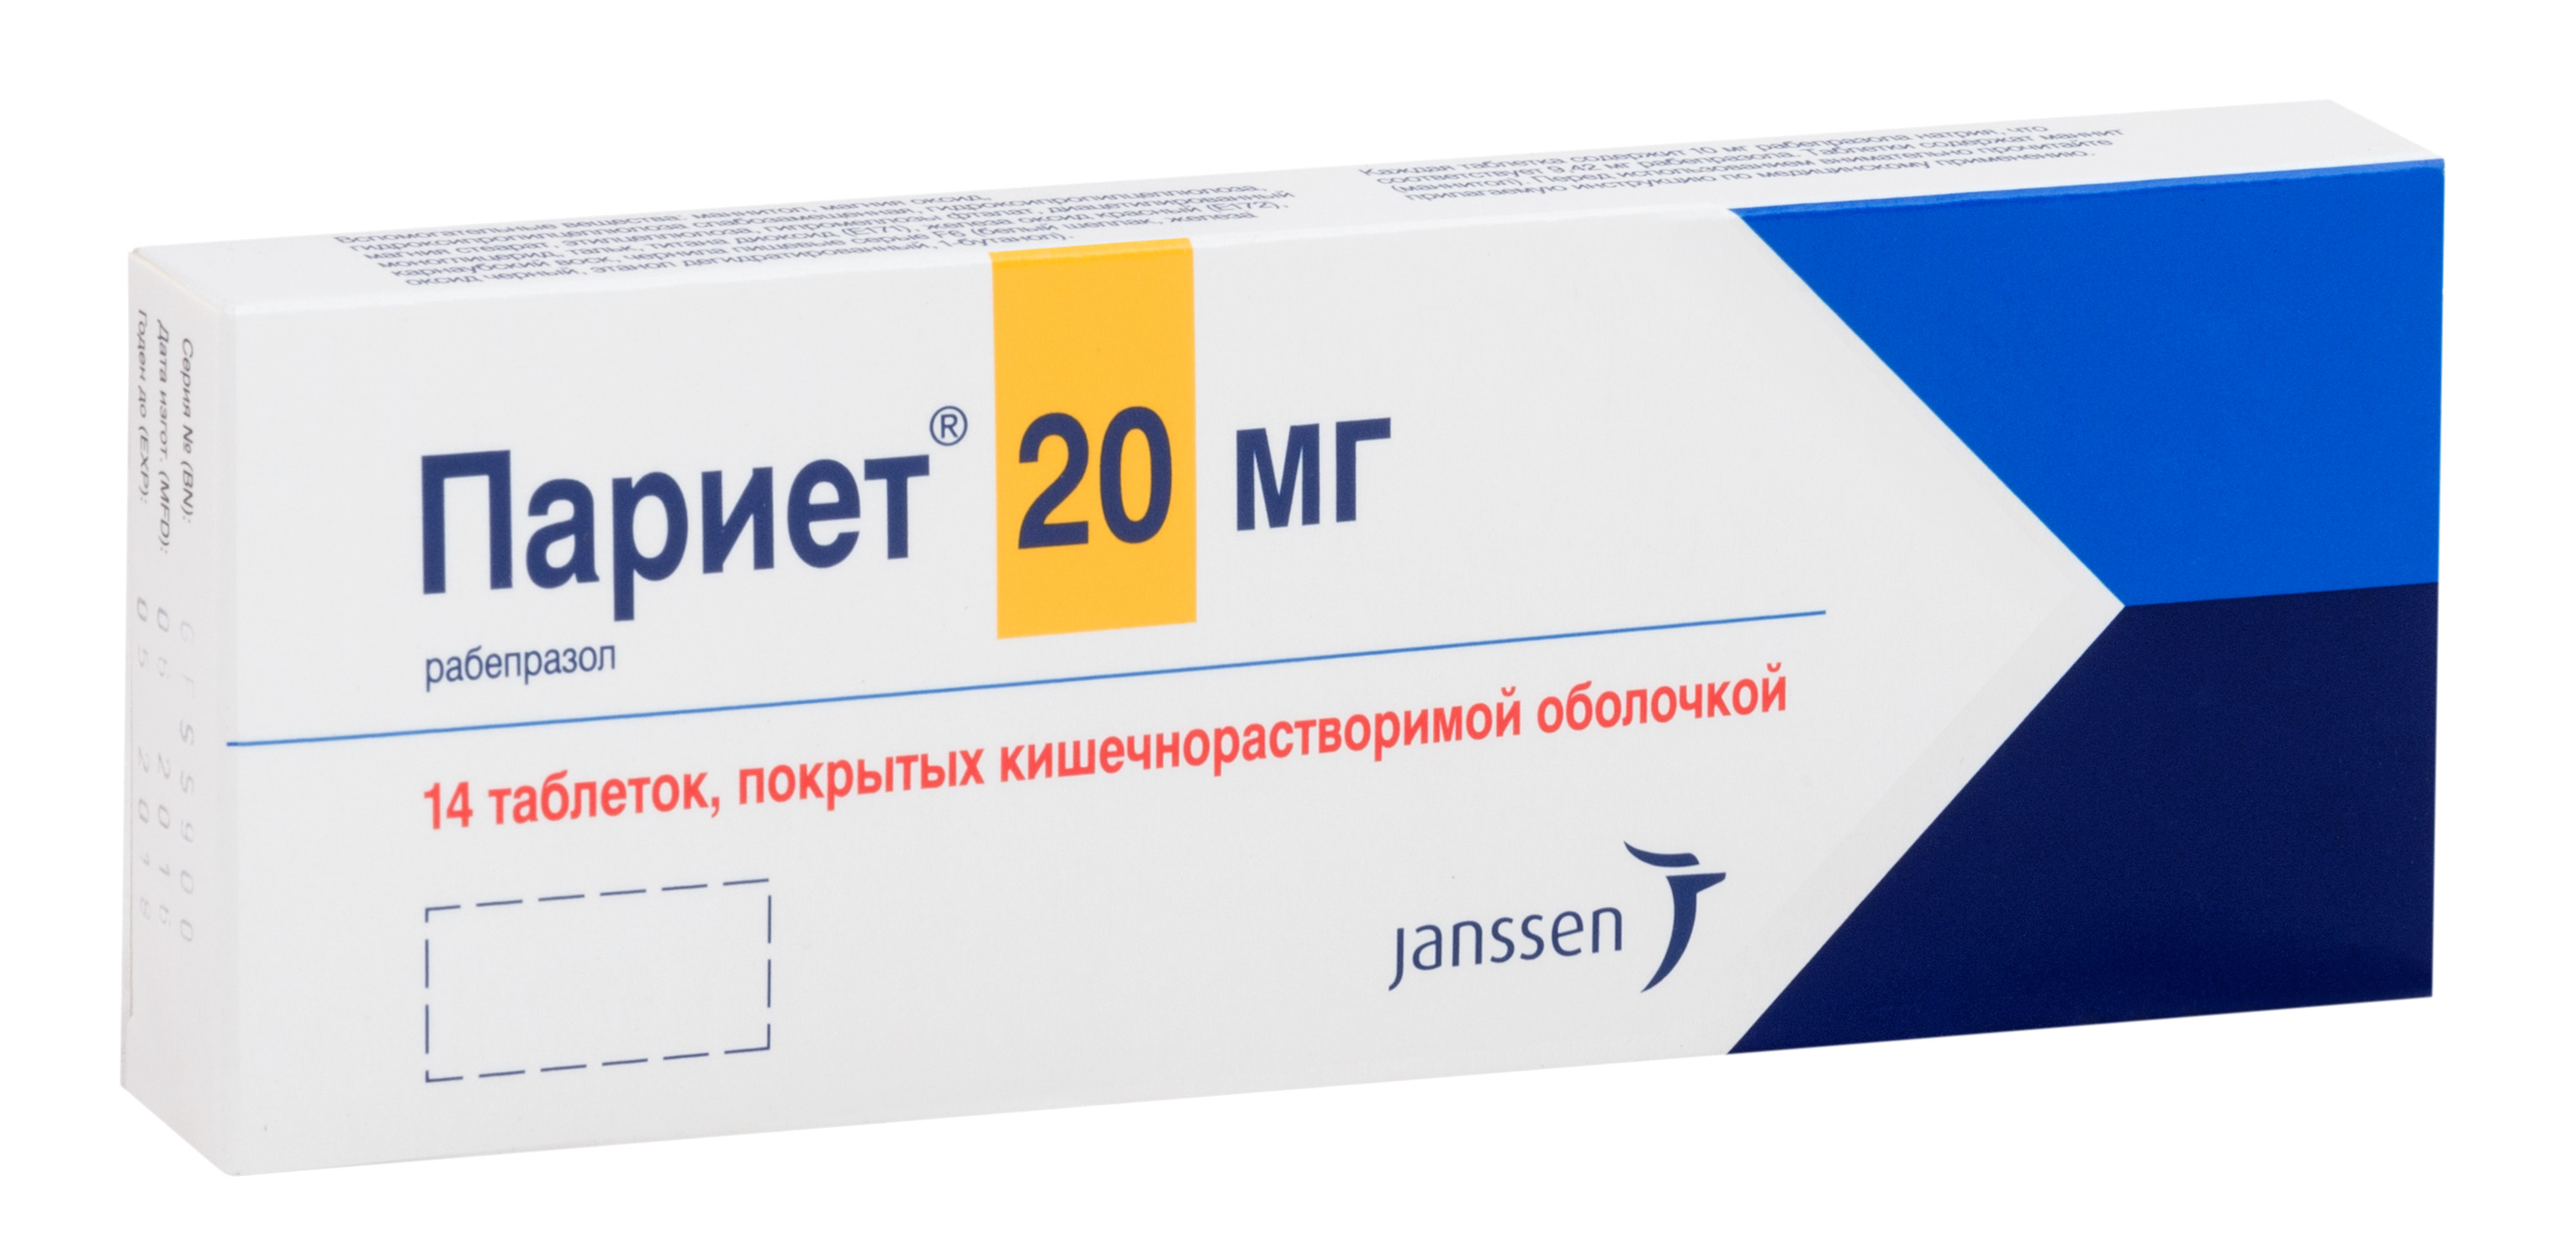 Париет табл. п.о. кишечнораствор. 20 мг №14